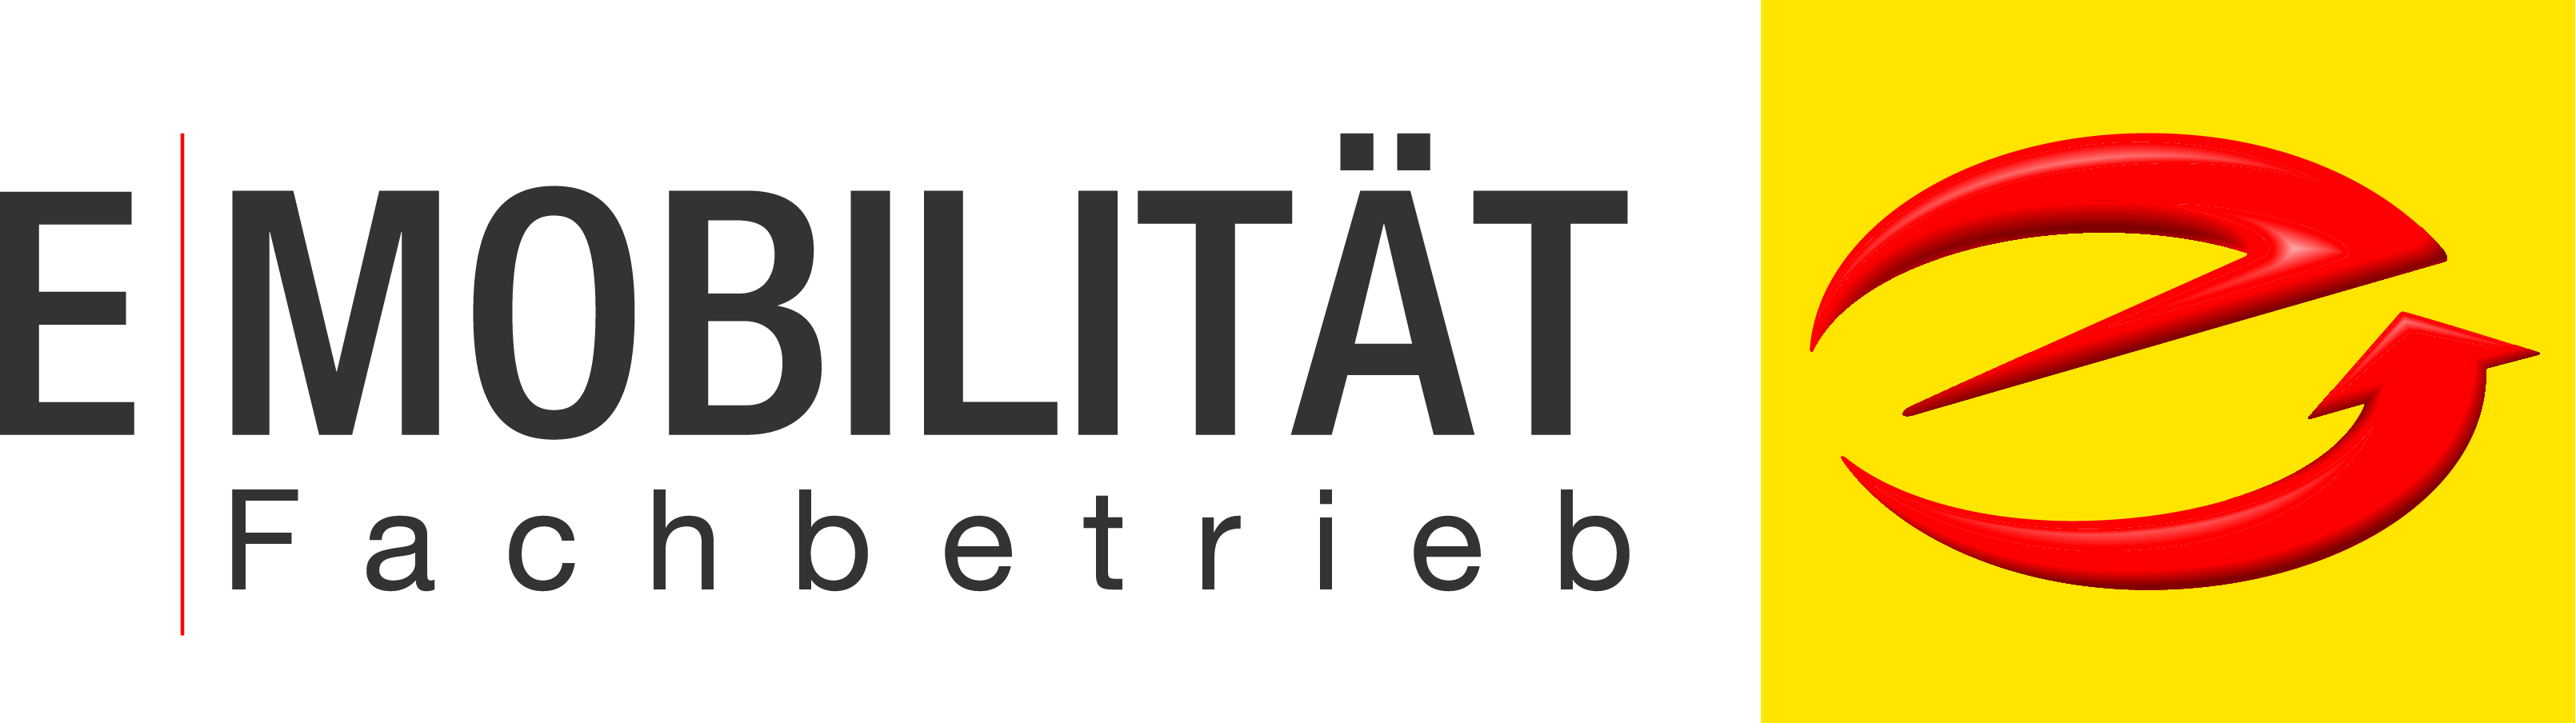 E-mobilität Logo